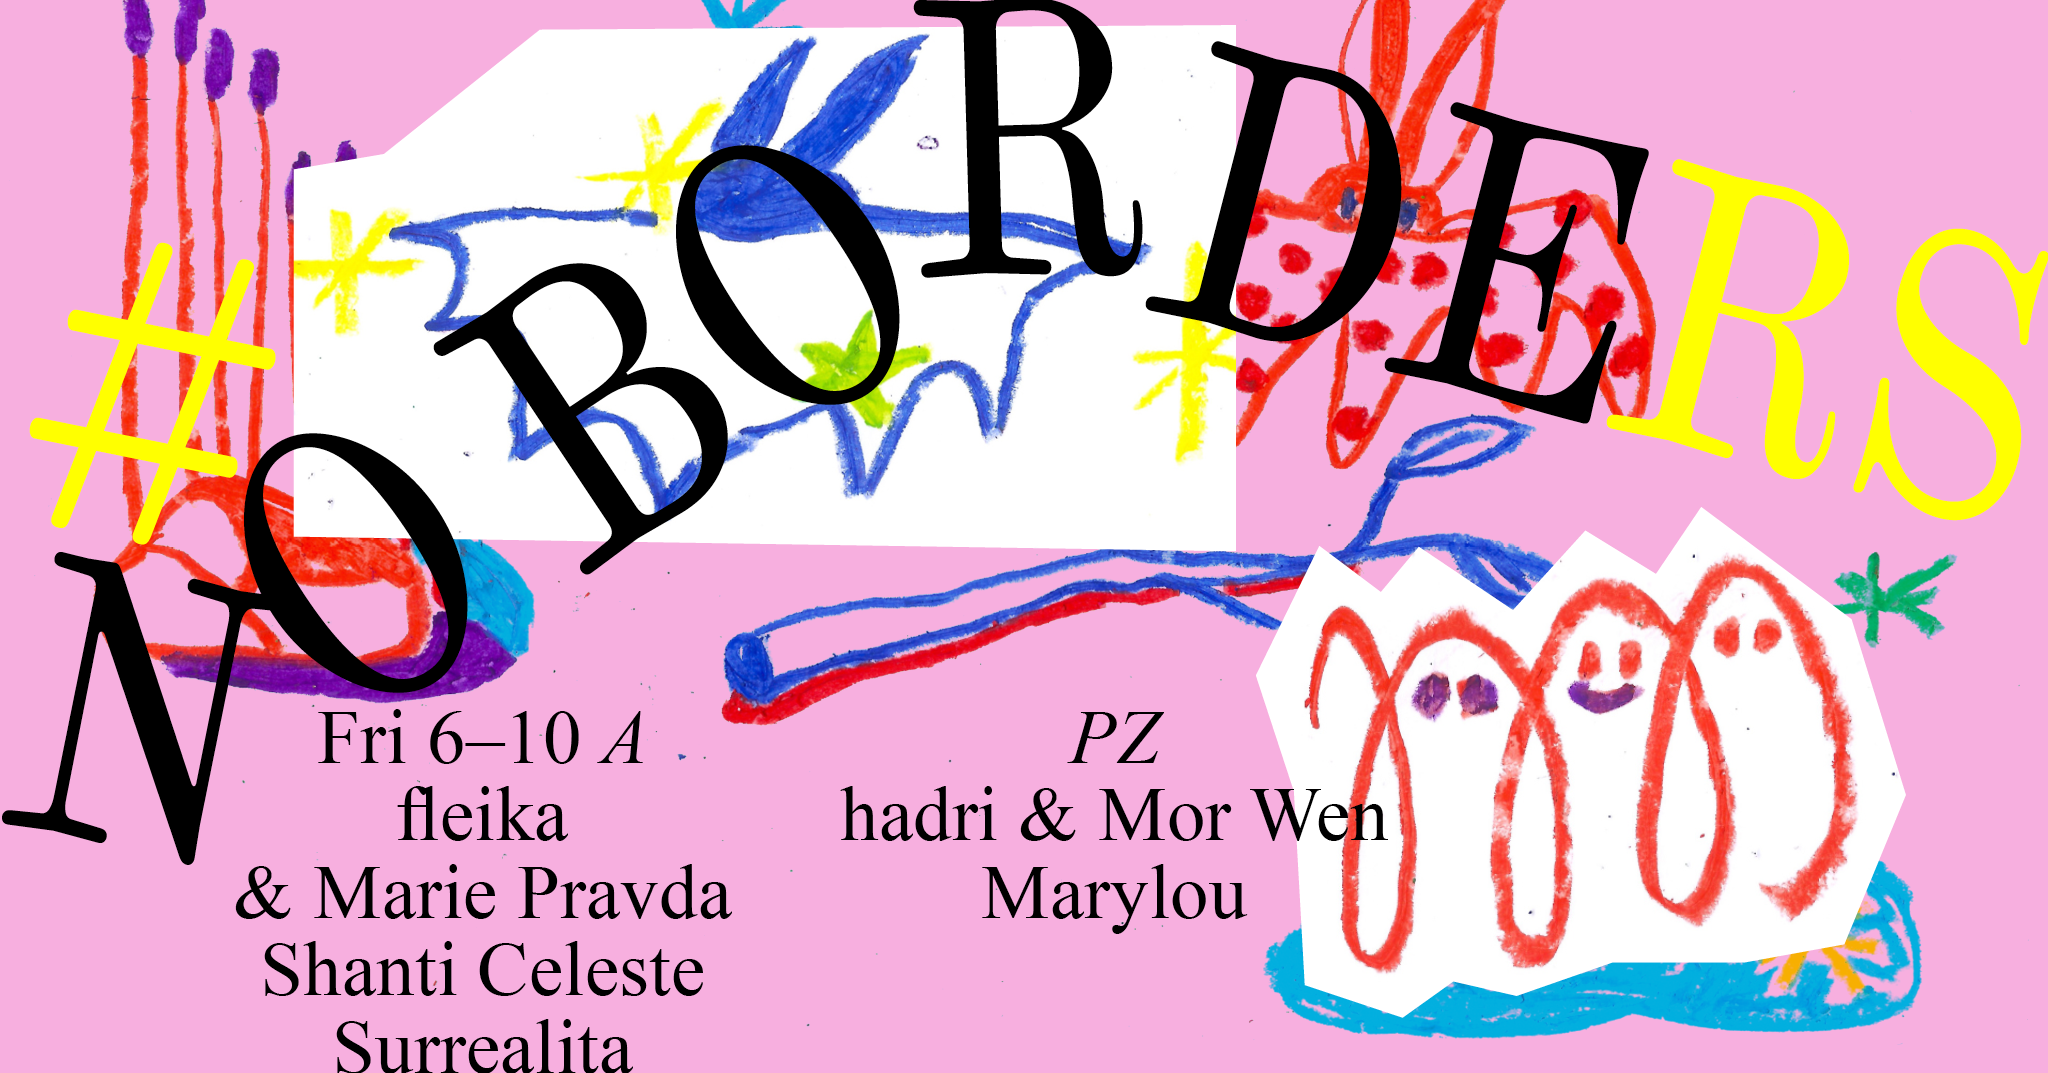 No Borders (A) fleika & Marie Pravda, Surrealita, Shanti Celeste (PZ) hadri & Mor Wen, Marylou - フライヤー表